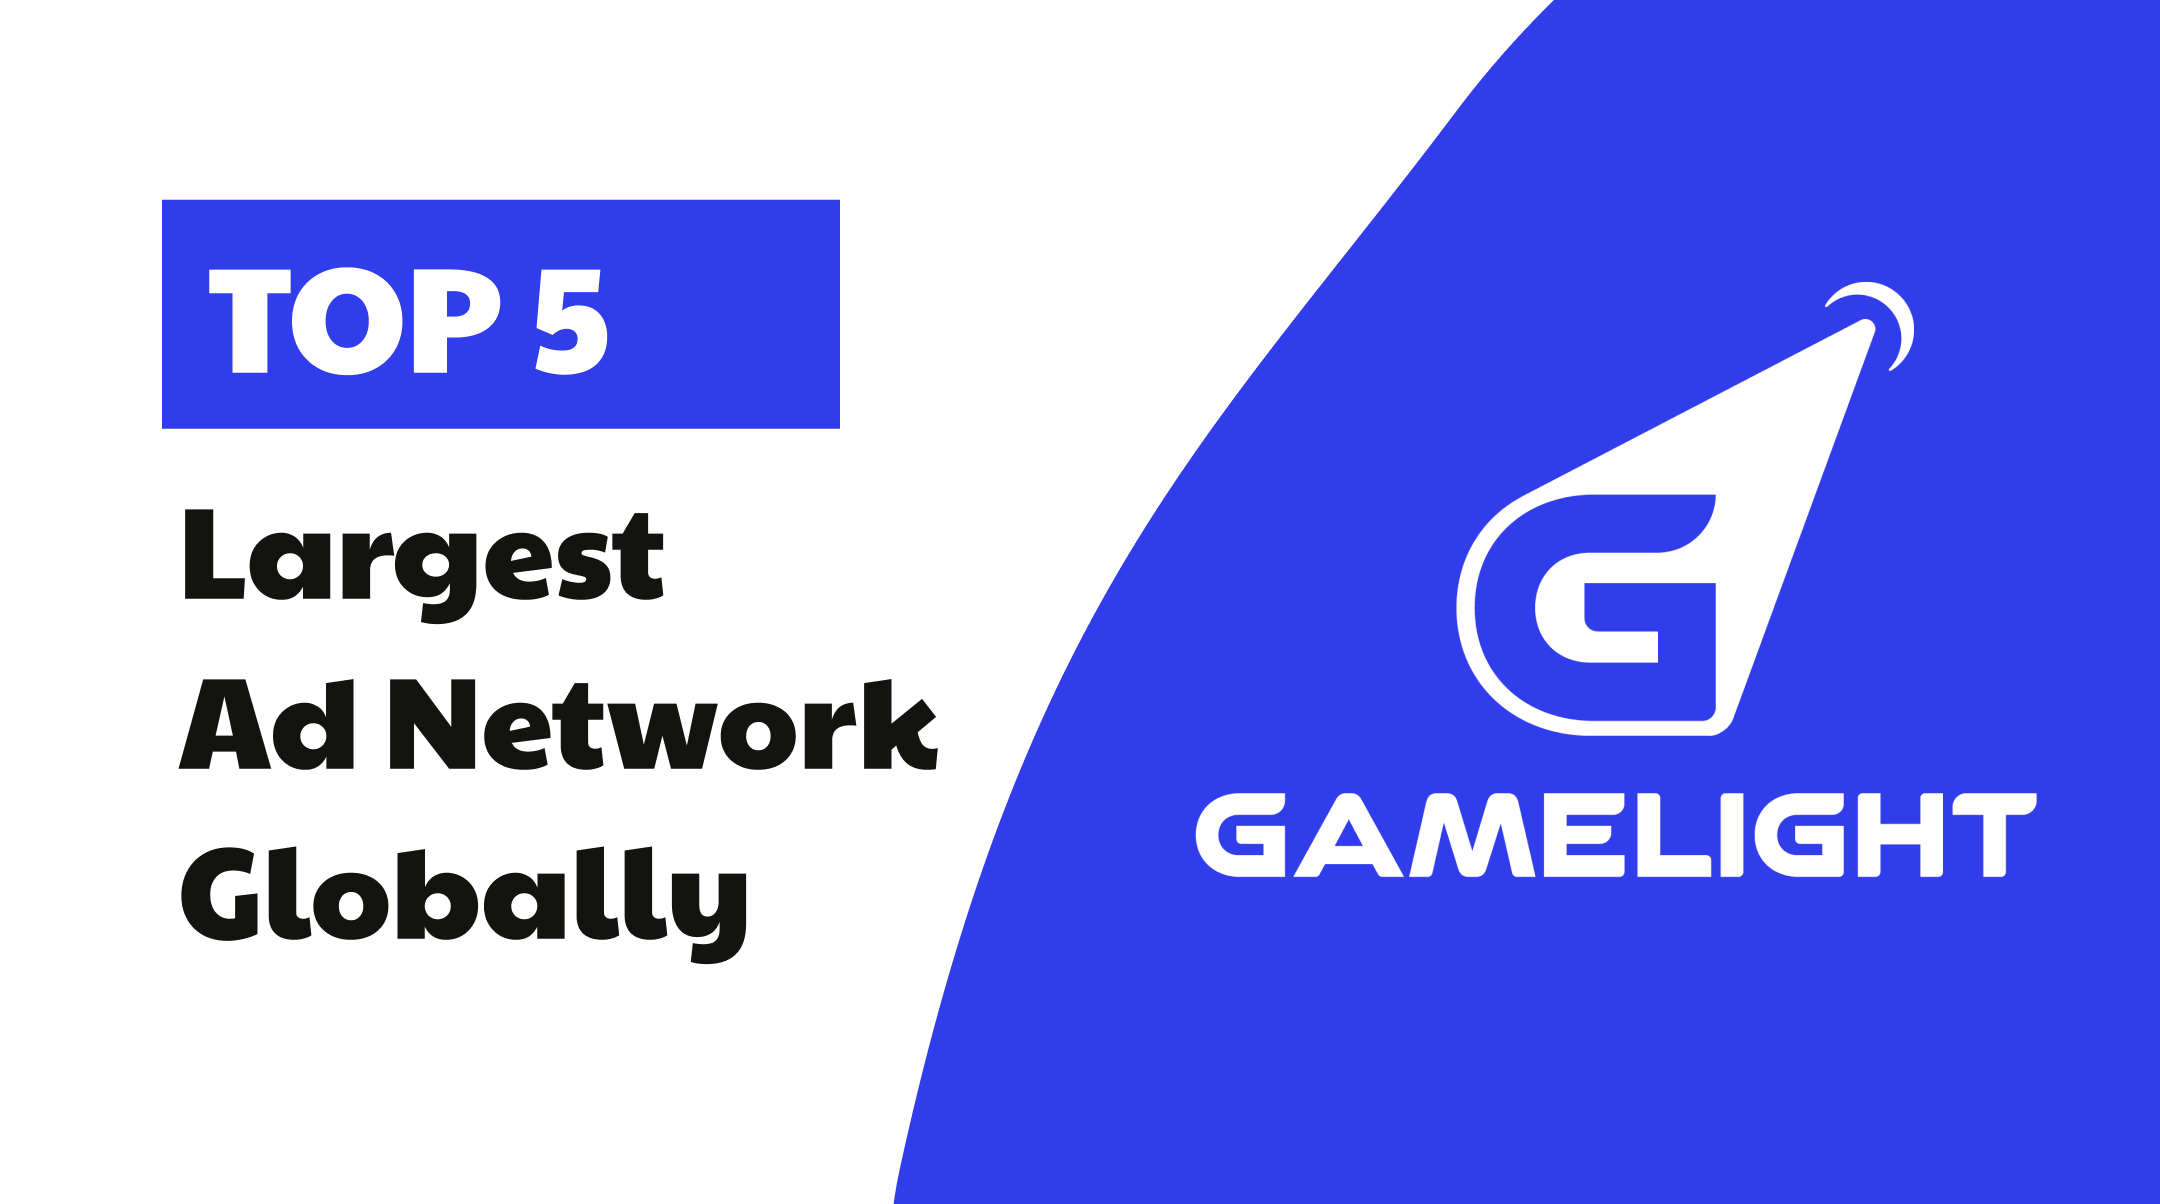 Gamelight ranks among Top 5 ad networks globally, Singular’s analysis reveals